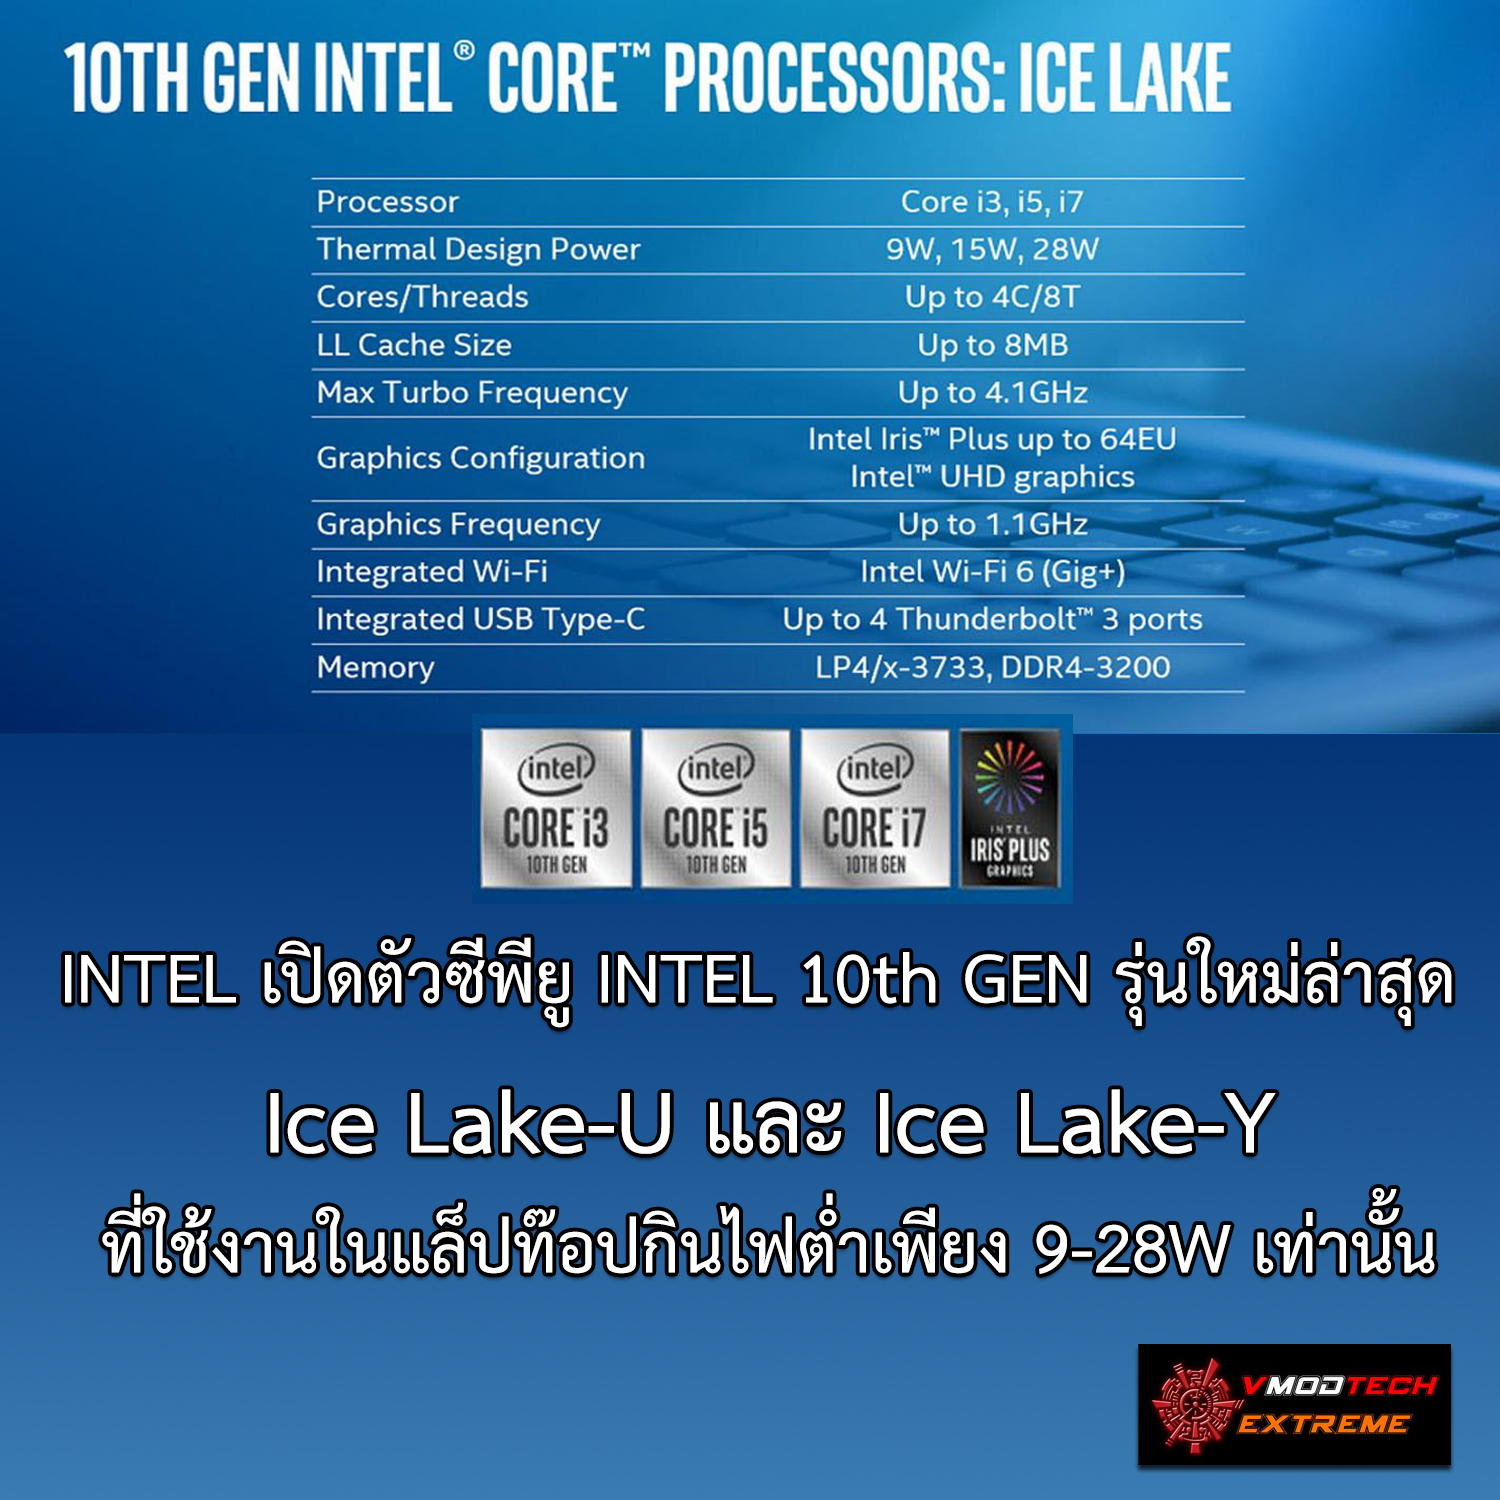 INTEL เปิดตัวซีพียู INTEL 10th GEN รุ่นใหม่ล่าสุด Ice Lake-U และ Ice Lake-Y ที่ใช้งานในแล็ปท๊อปกินไฟต่ำเพียง 9-28W เท่านั้น 